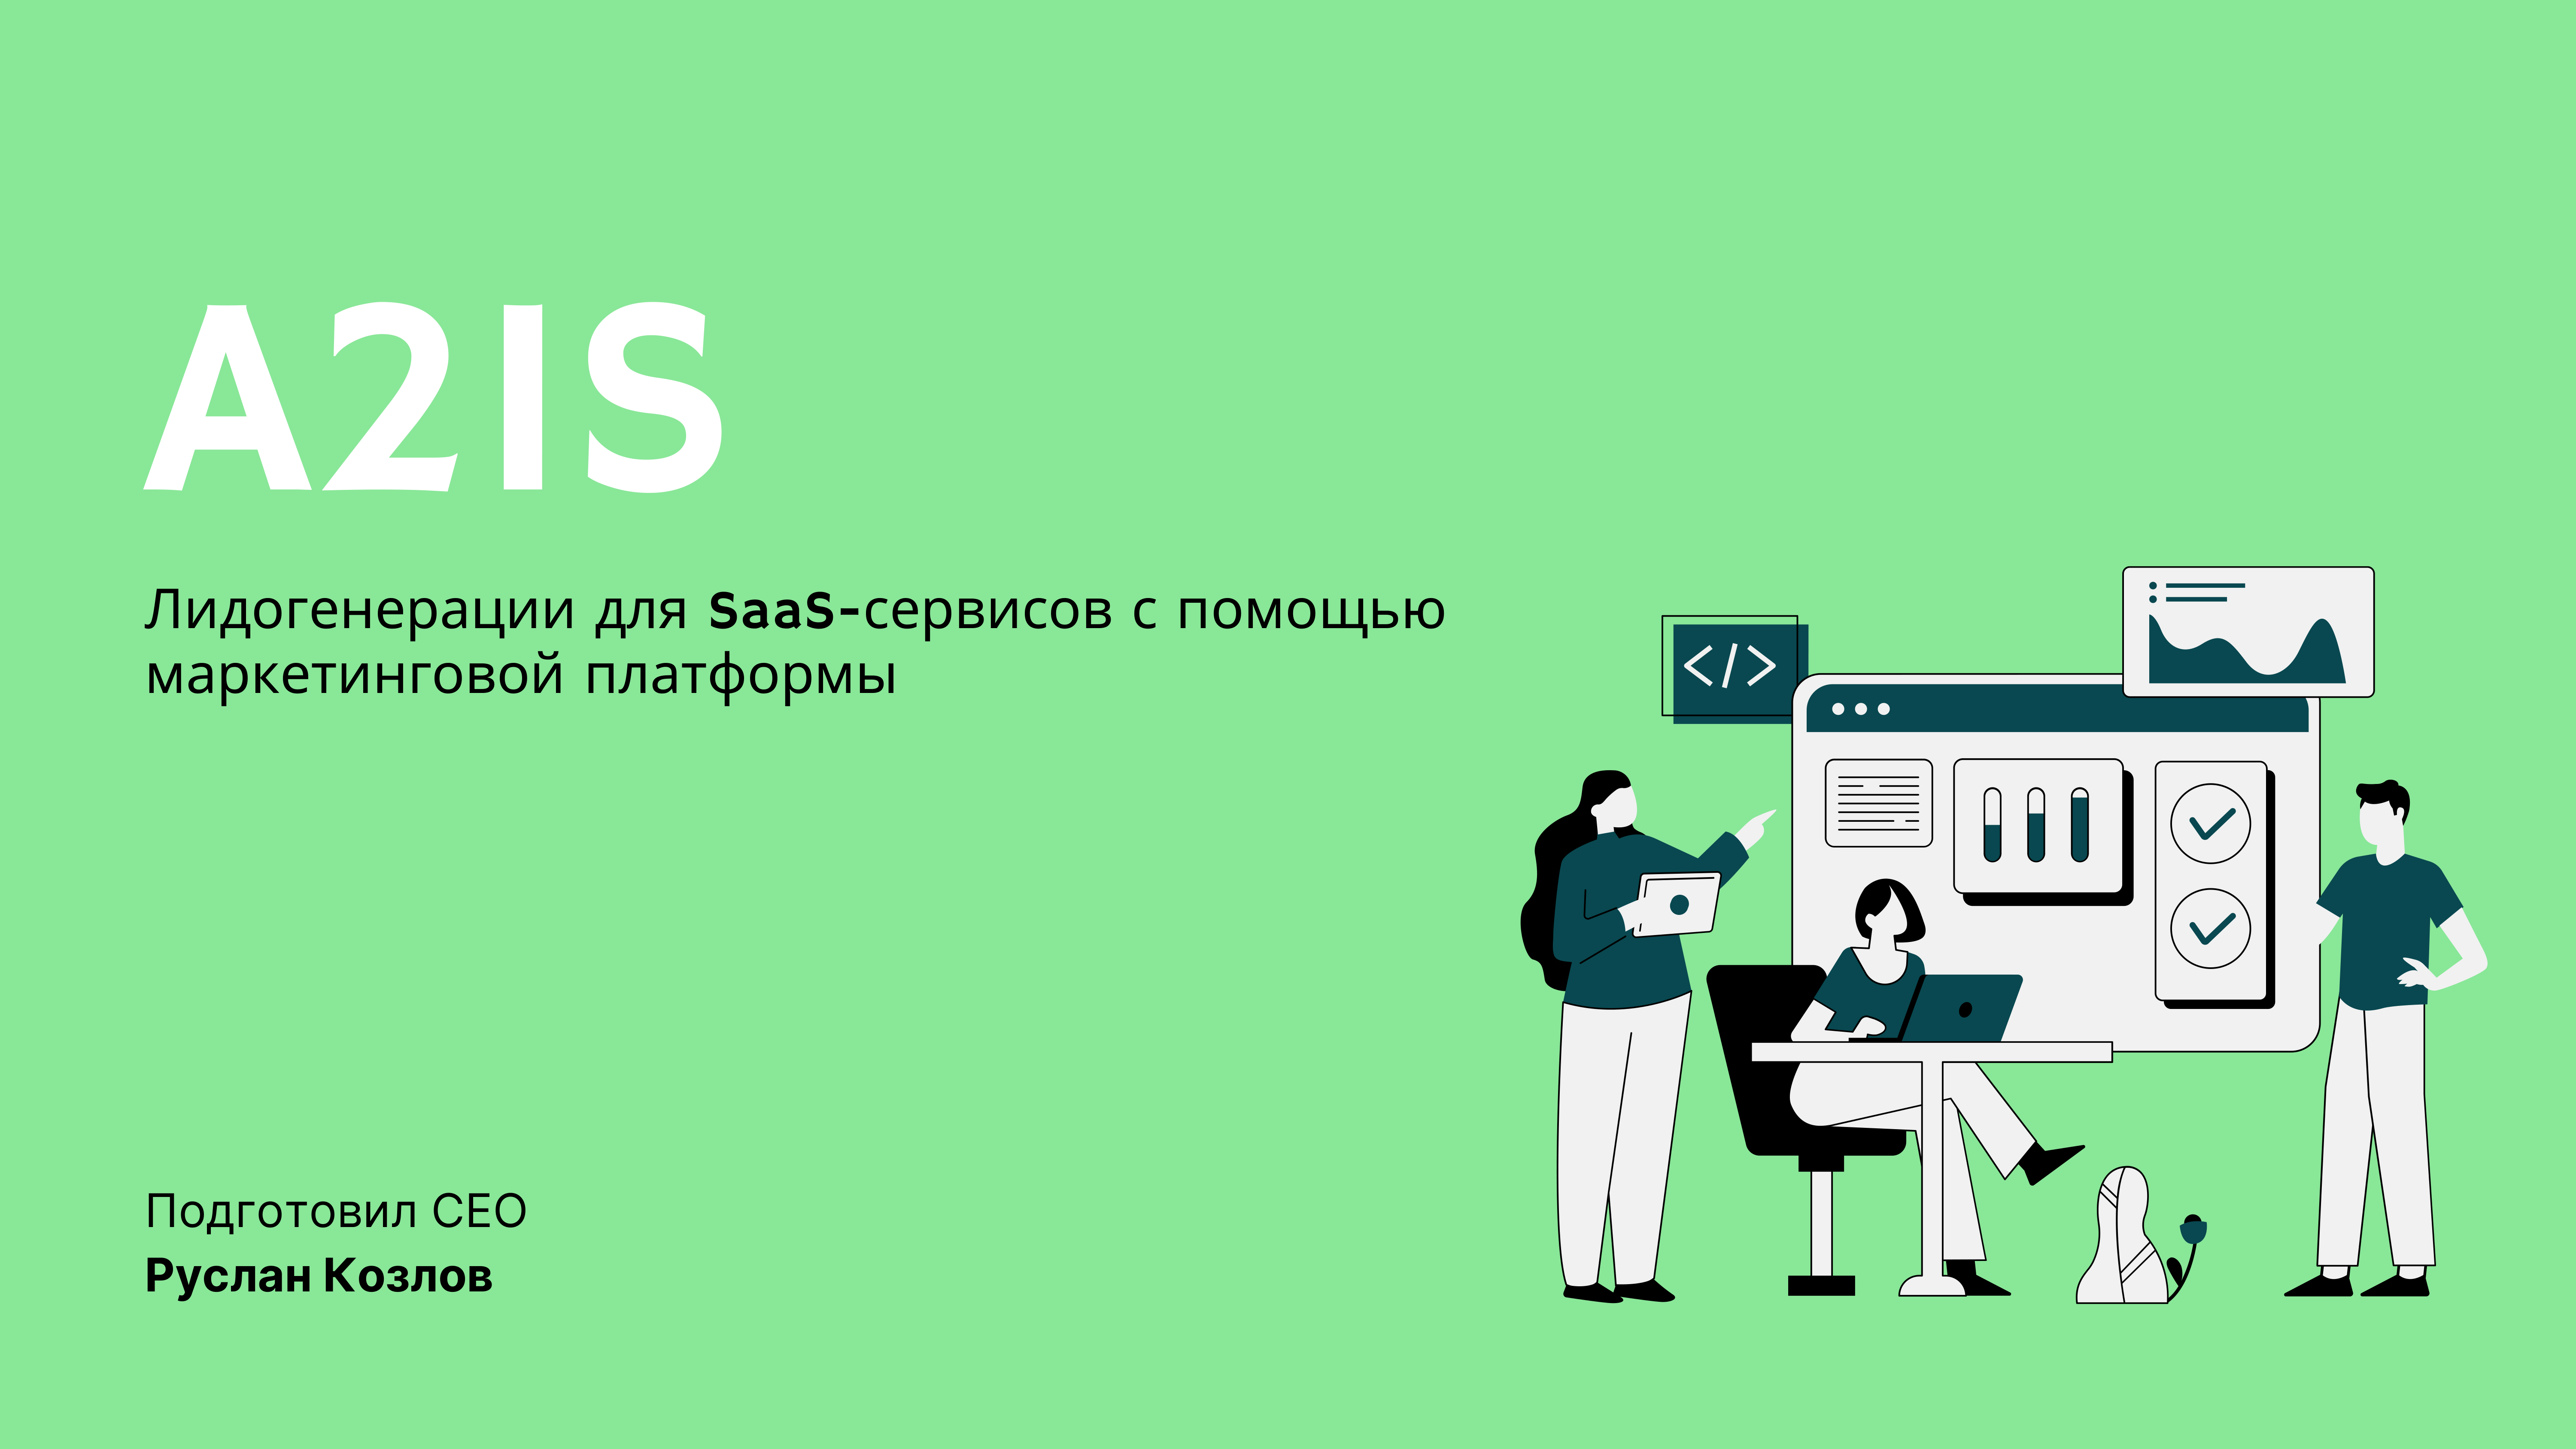 A2IS - маркетинговая платформа для SaaS-сервисов